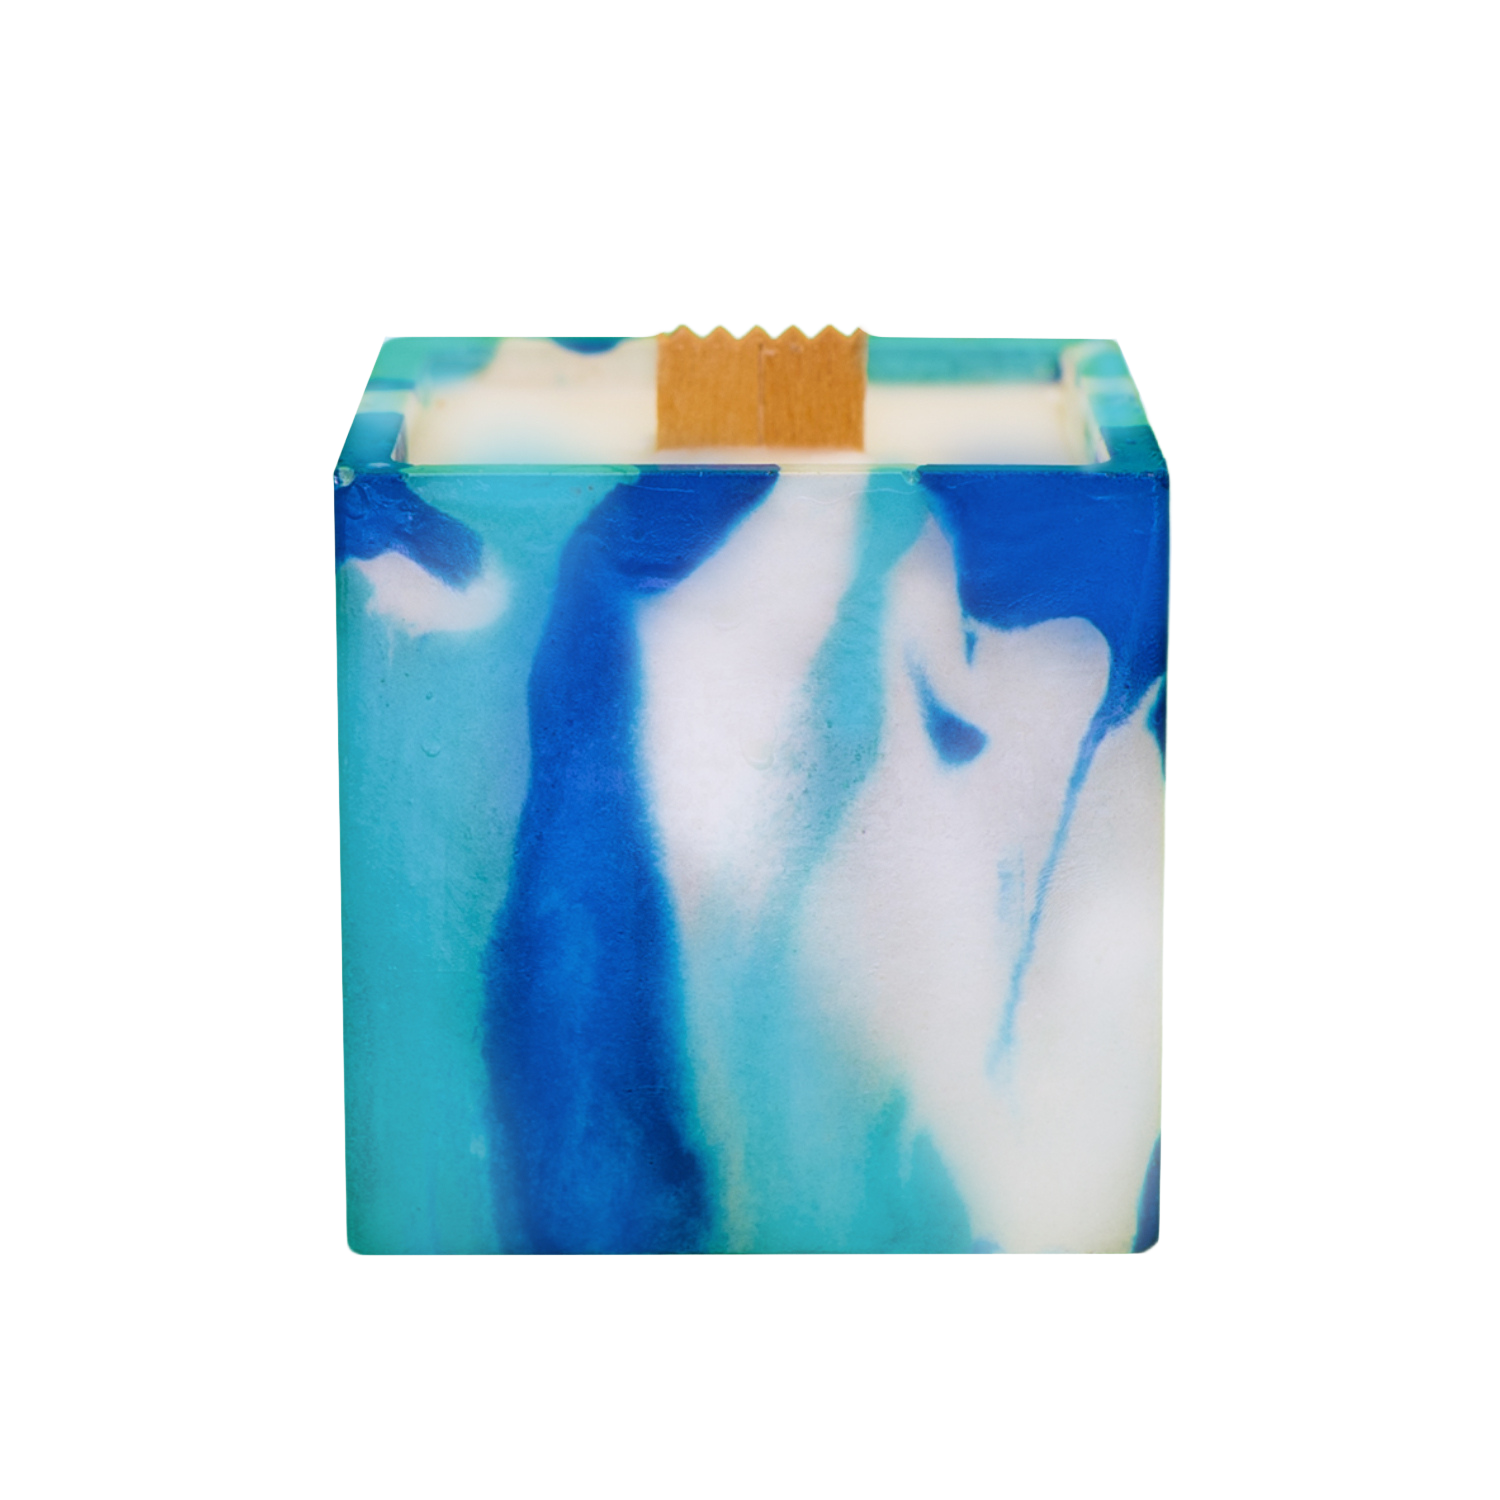 Bougie cube xxl - Béton Tie&Dye turquoise et bleu